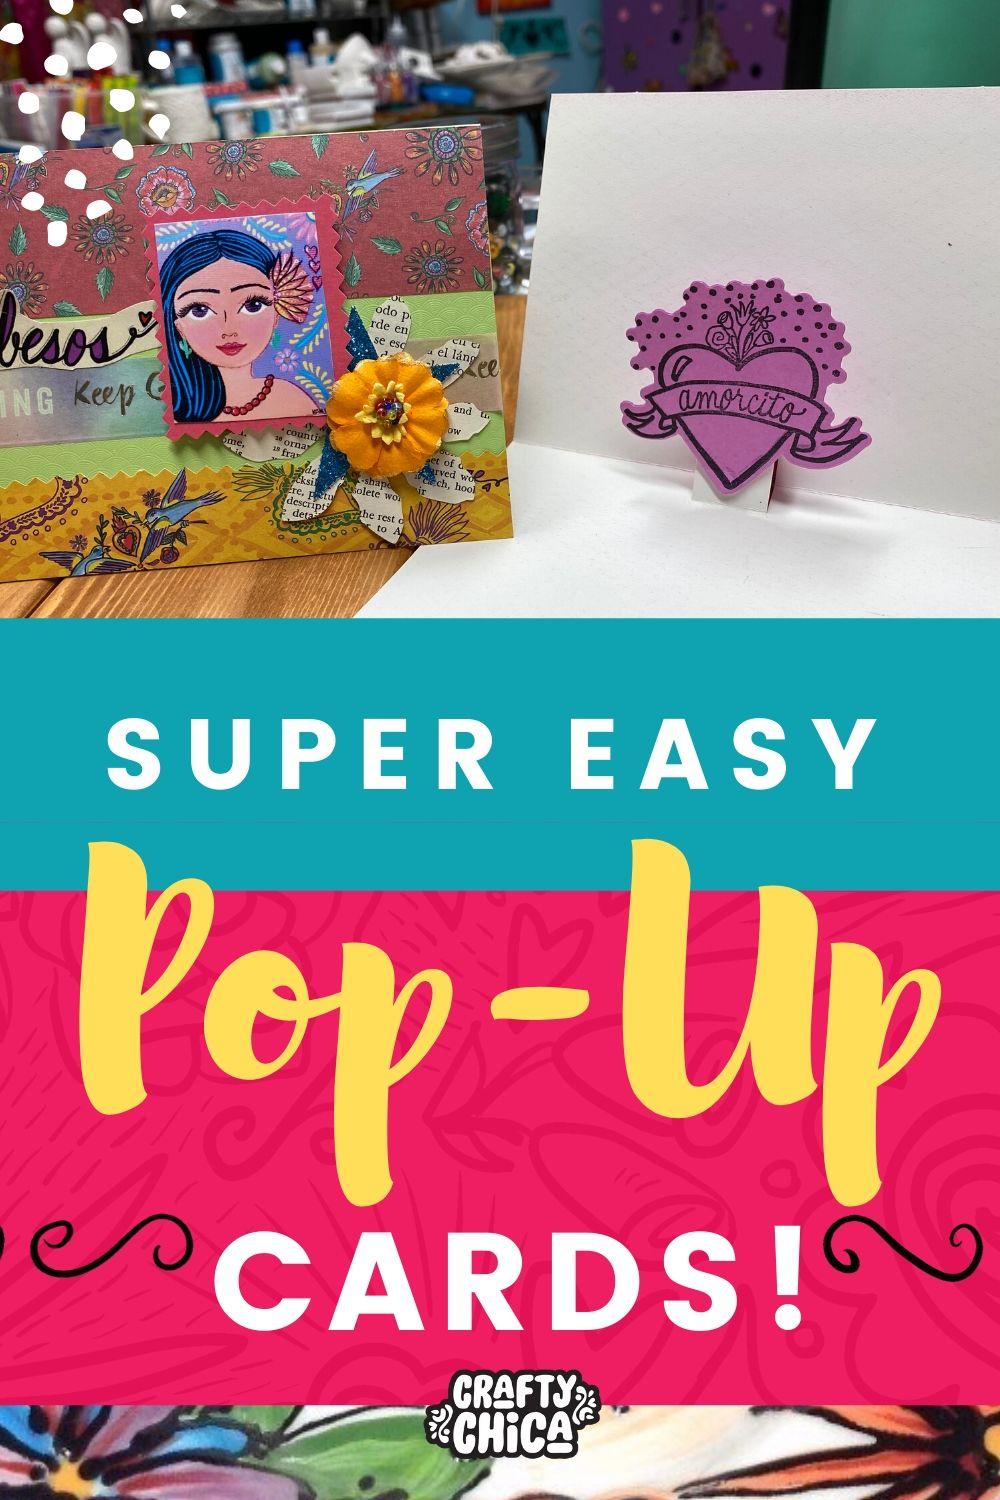 How to make pop up cards #craftychica #popupcard #cardmakingideas